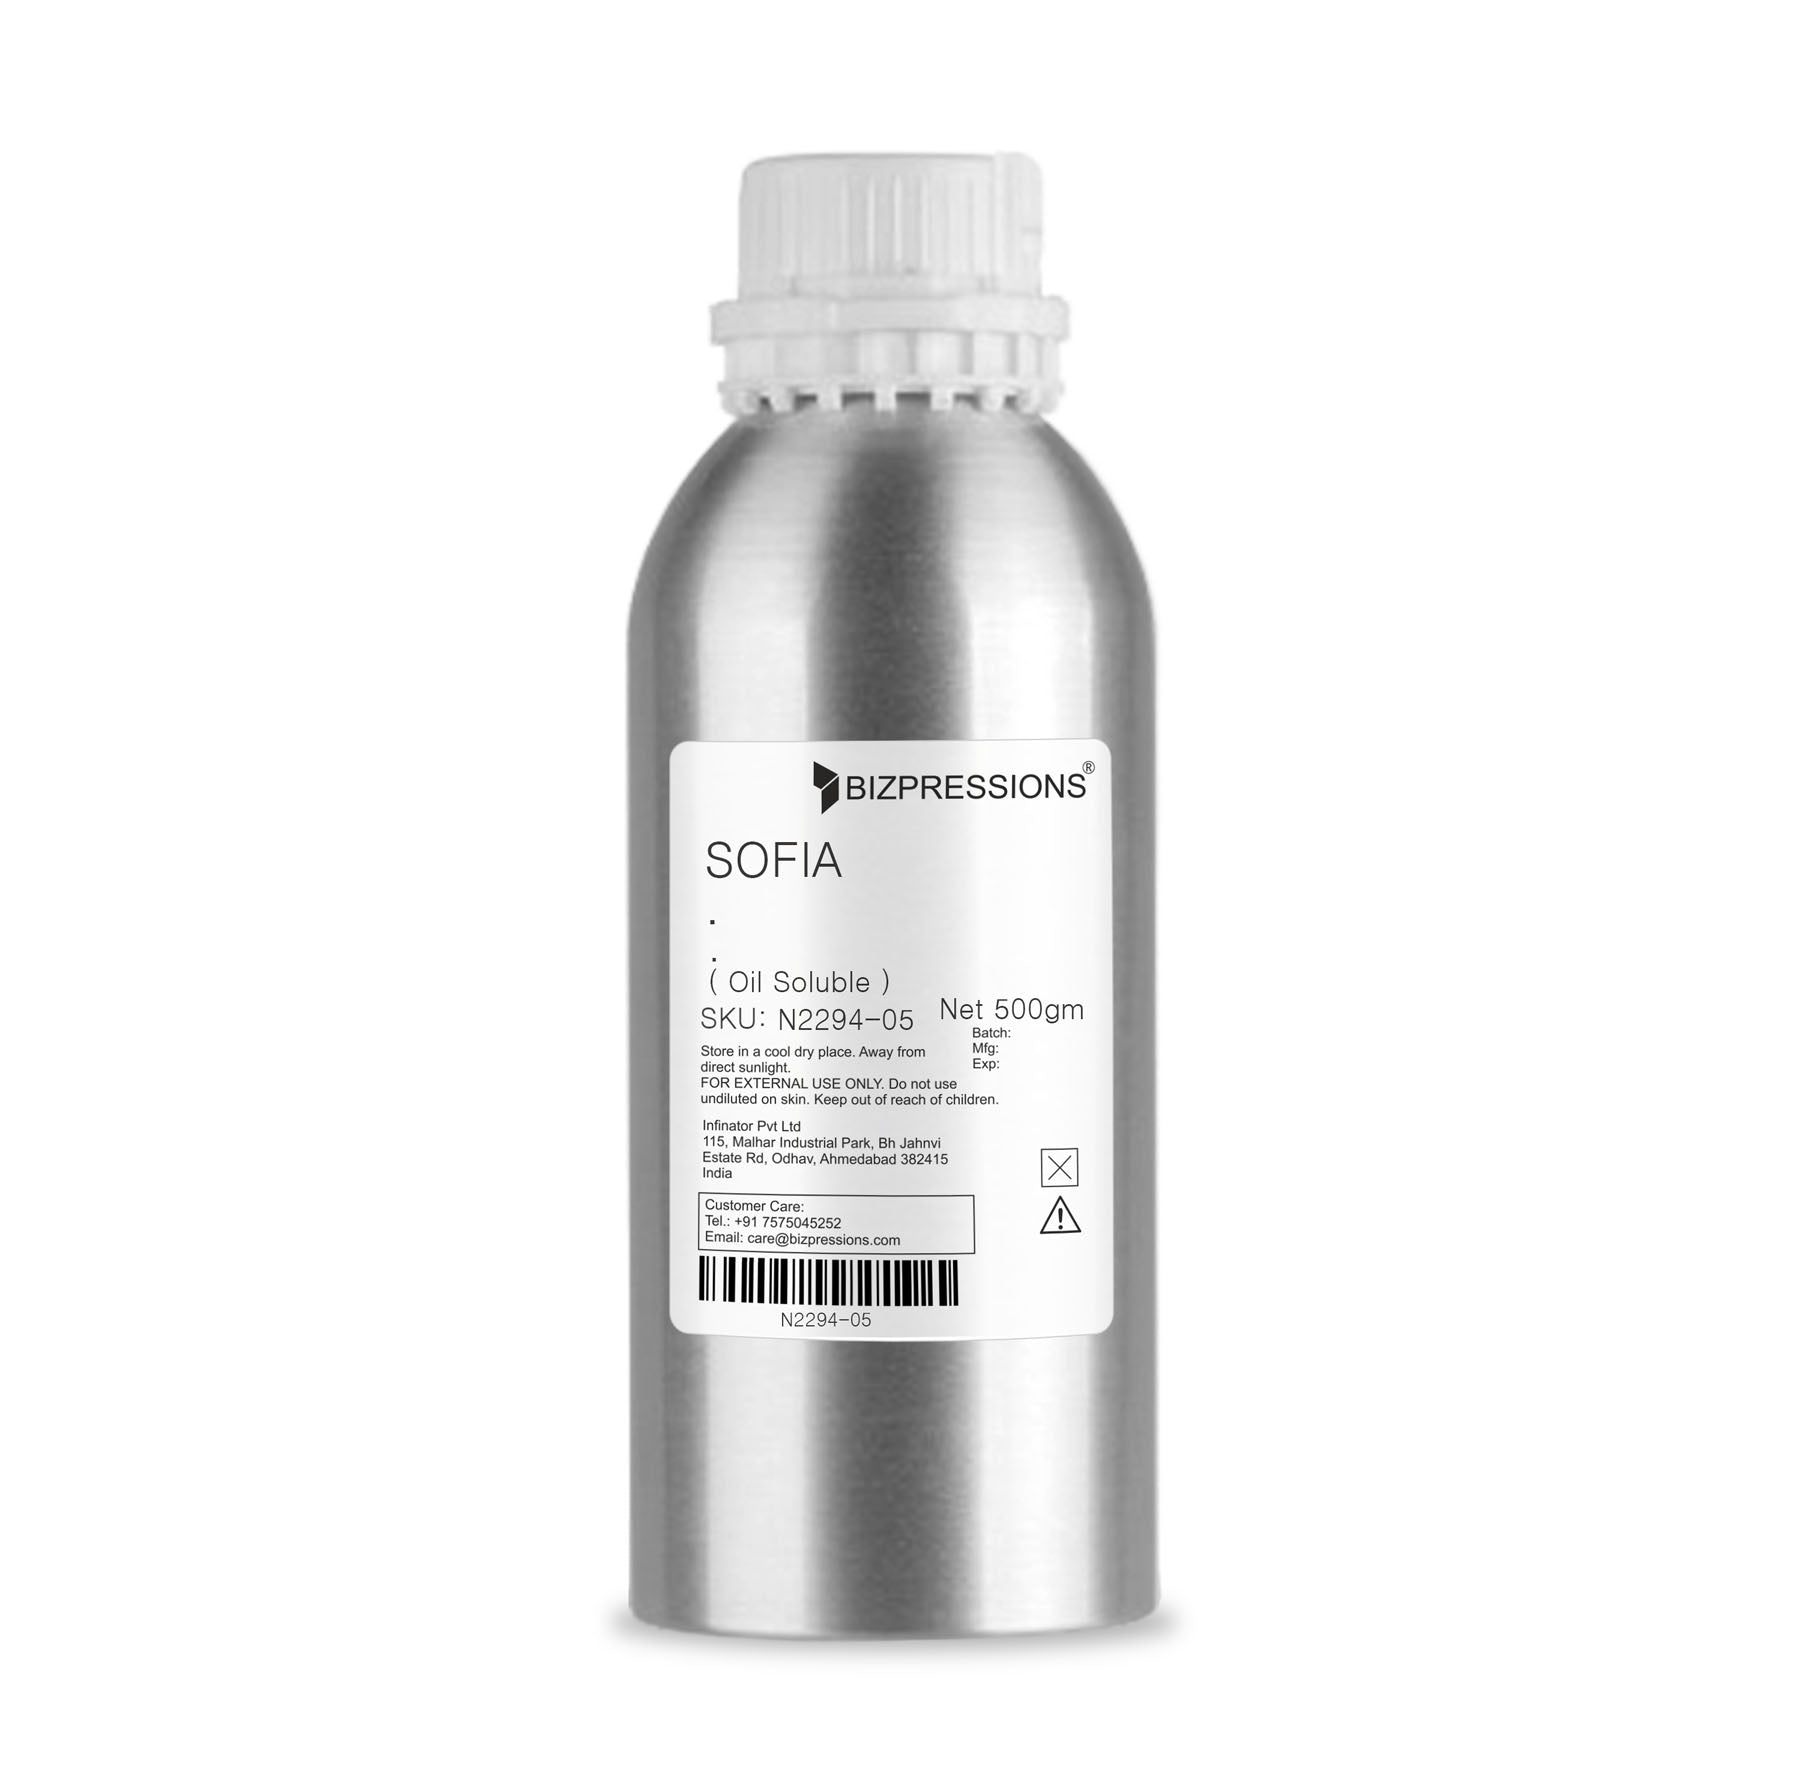 SOFIA - Fragrance ( Oil Soluble ) - 500 gm